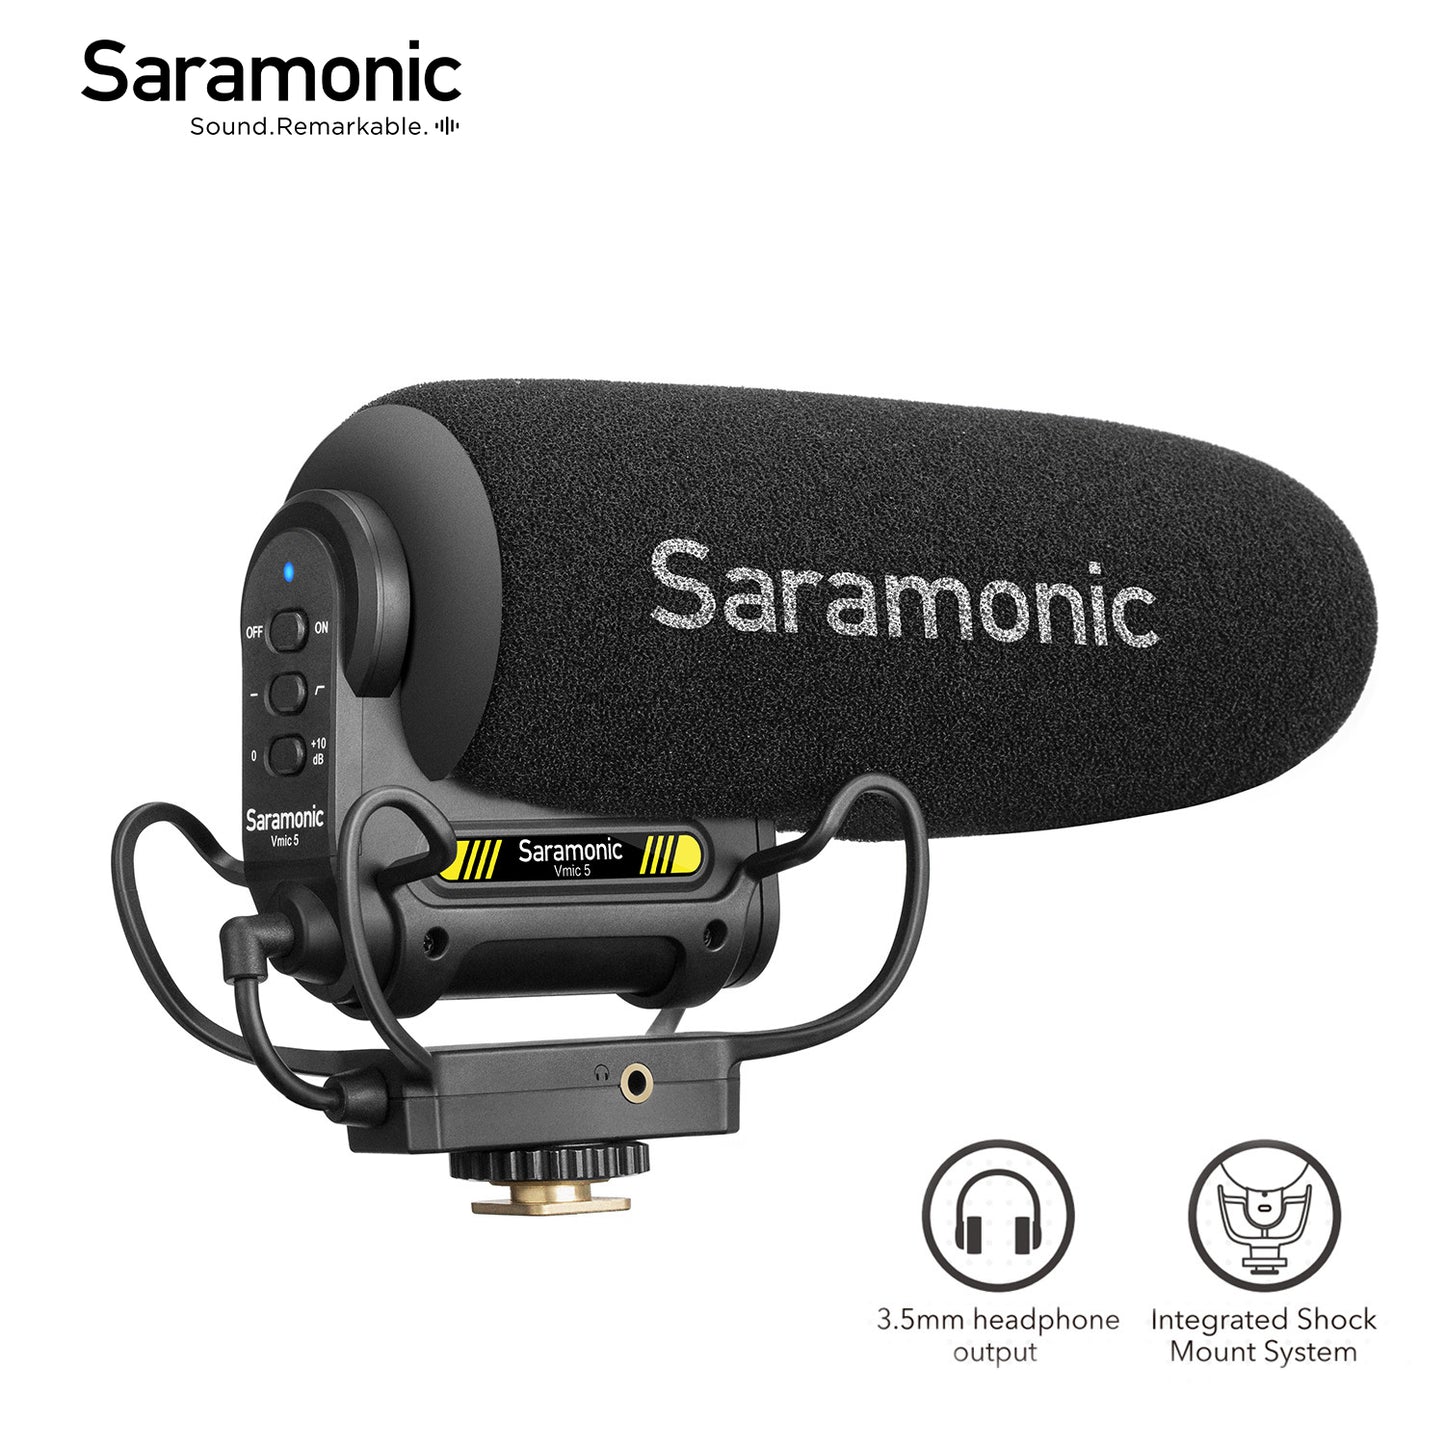 Saramonic Vmic5 Super-Cardioid On-camera Shotgun Microphone